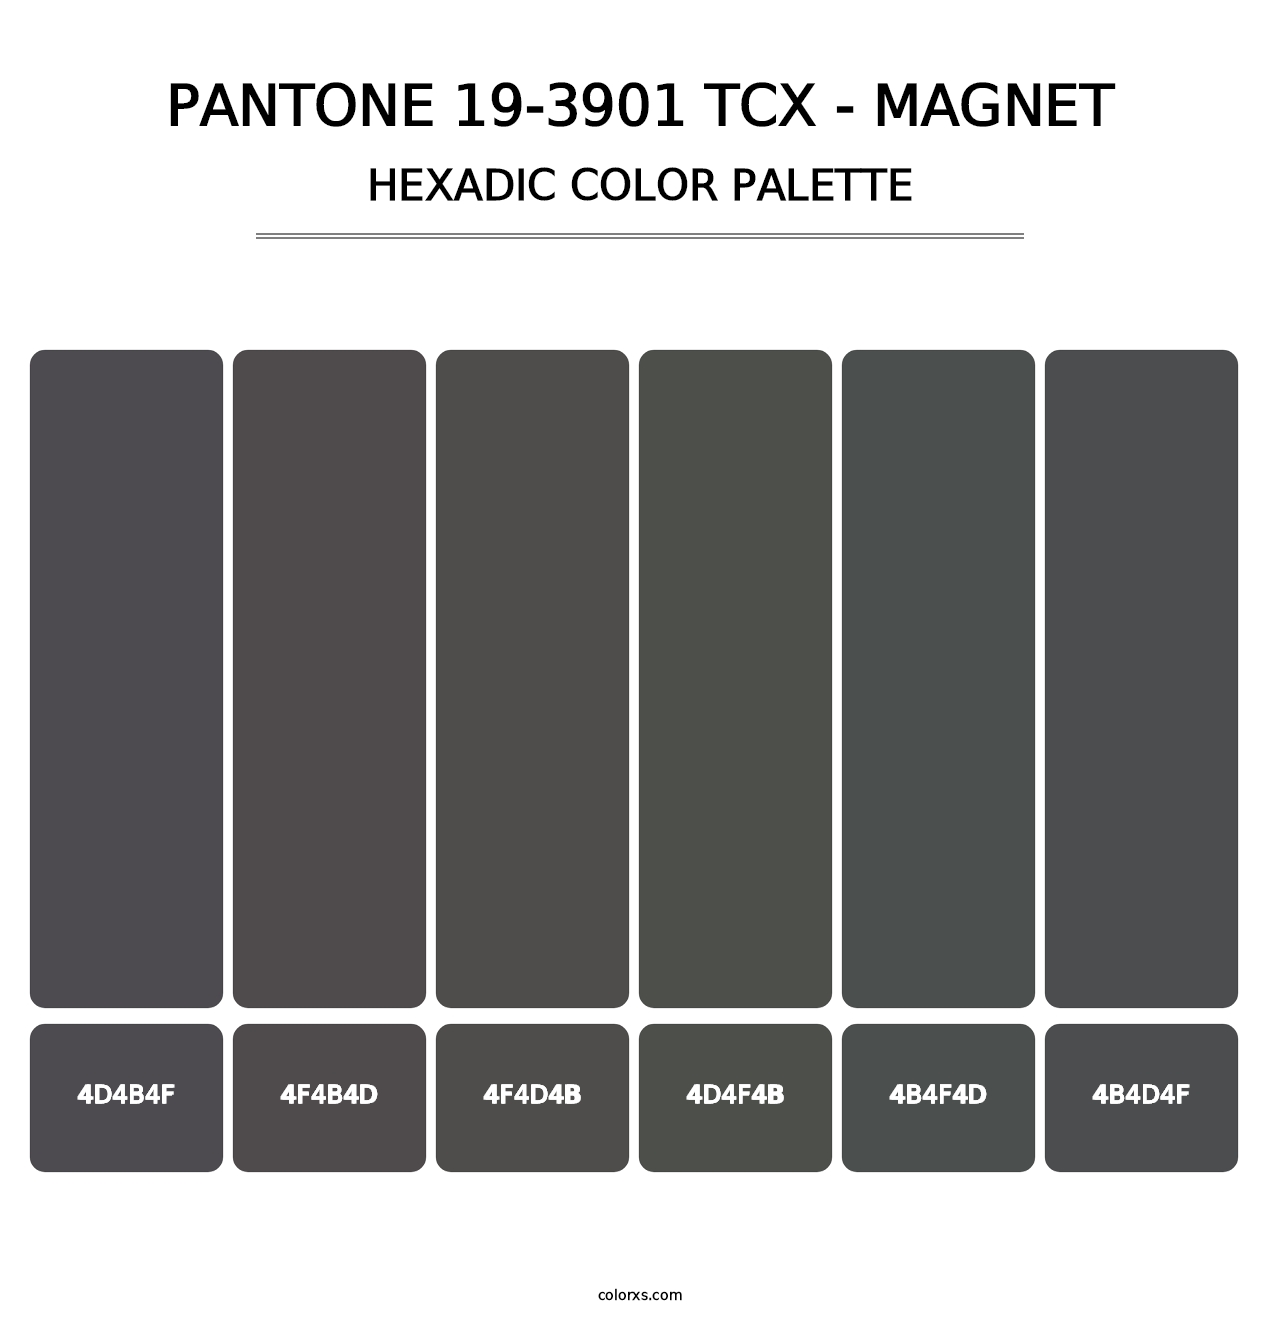 PANTONE 19-3901 TCX - Magnet - Hexadic Color Palette